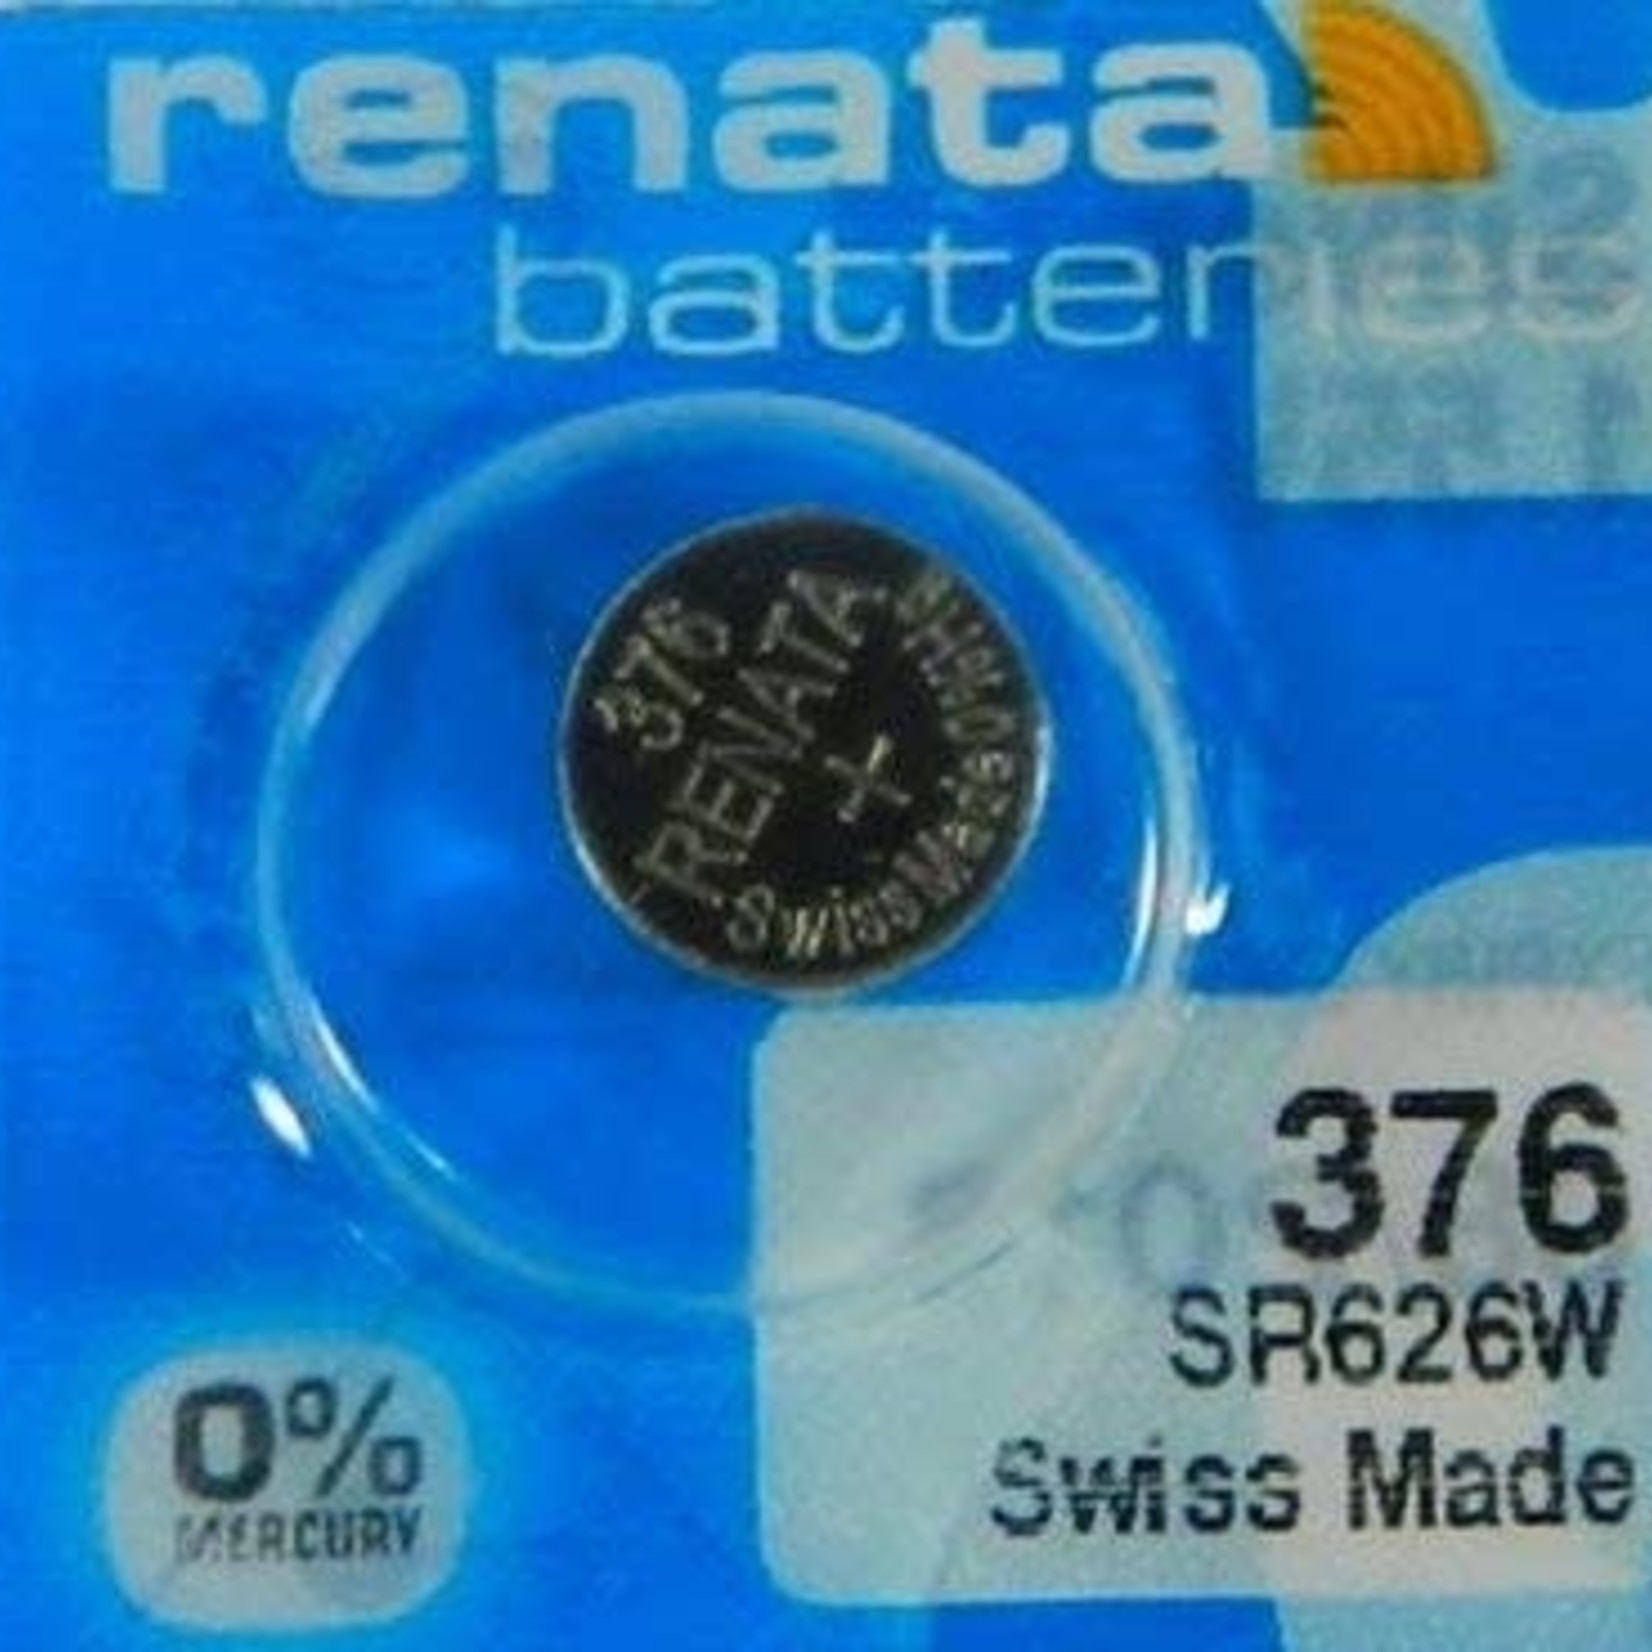 Battery #376